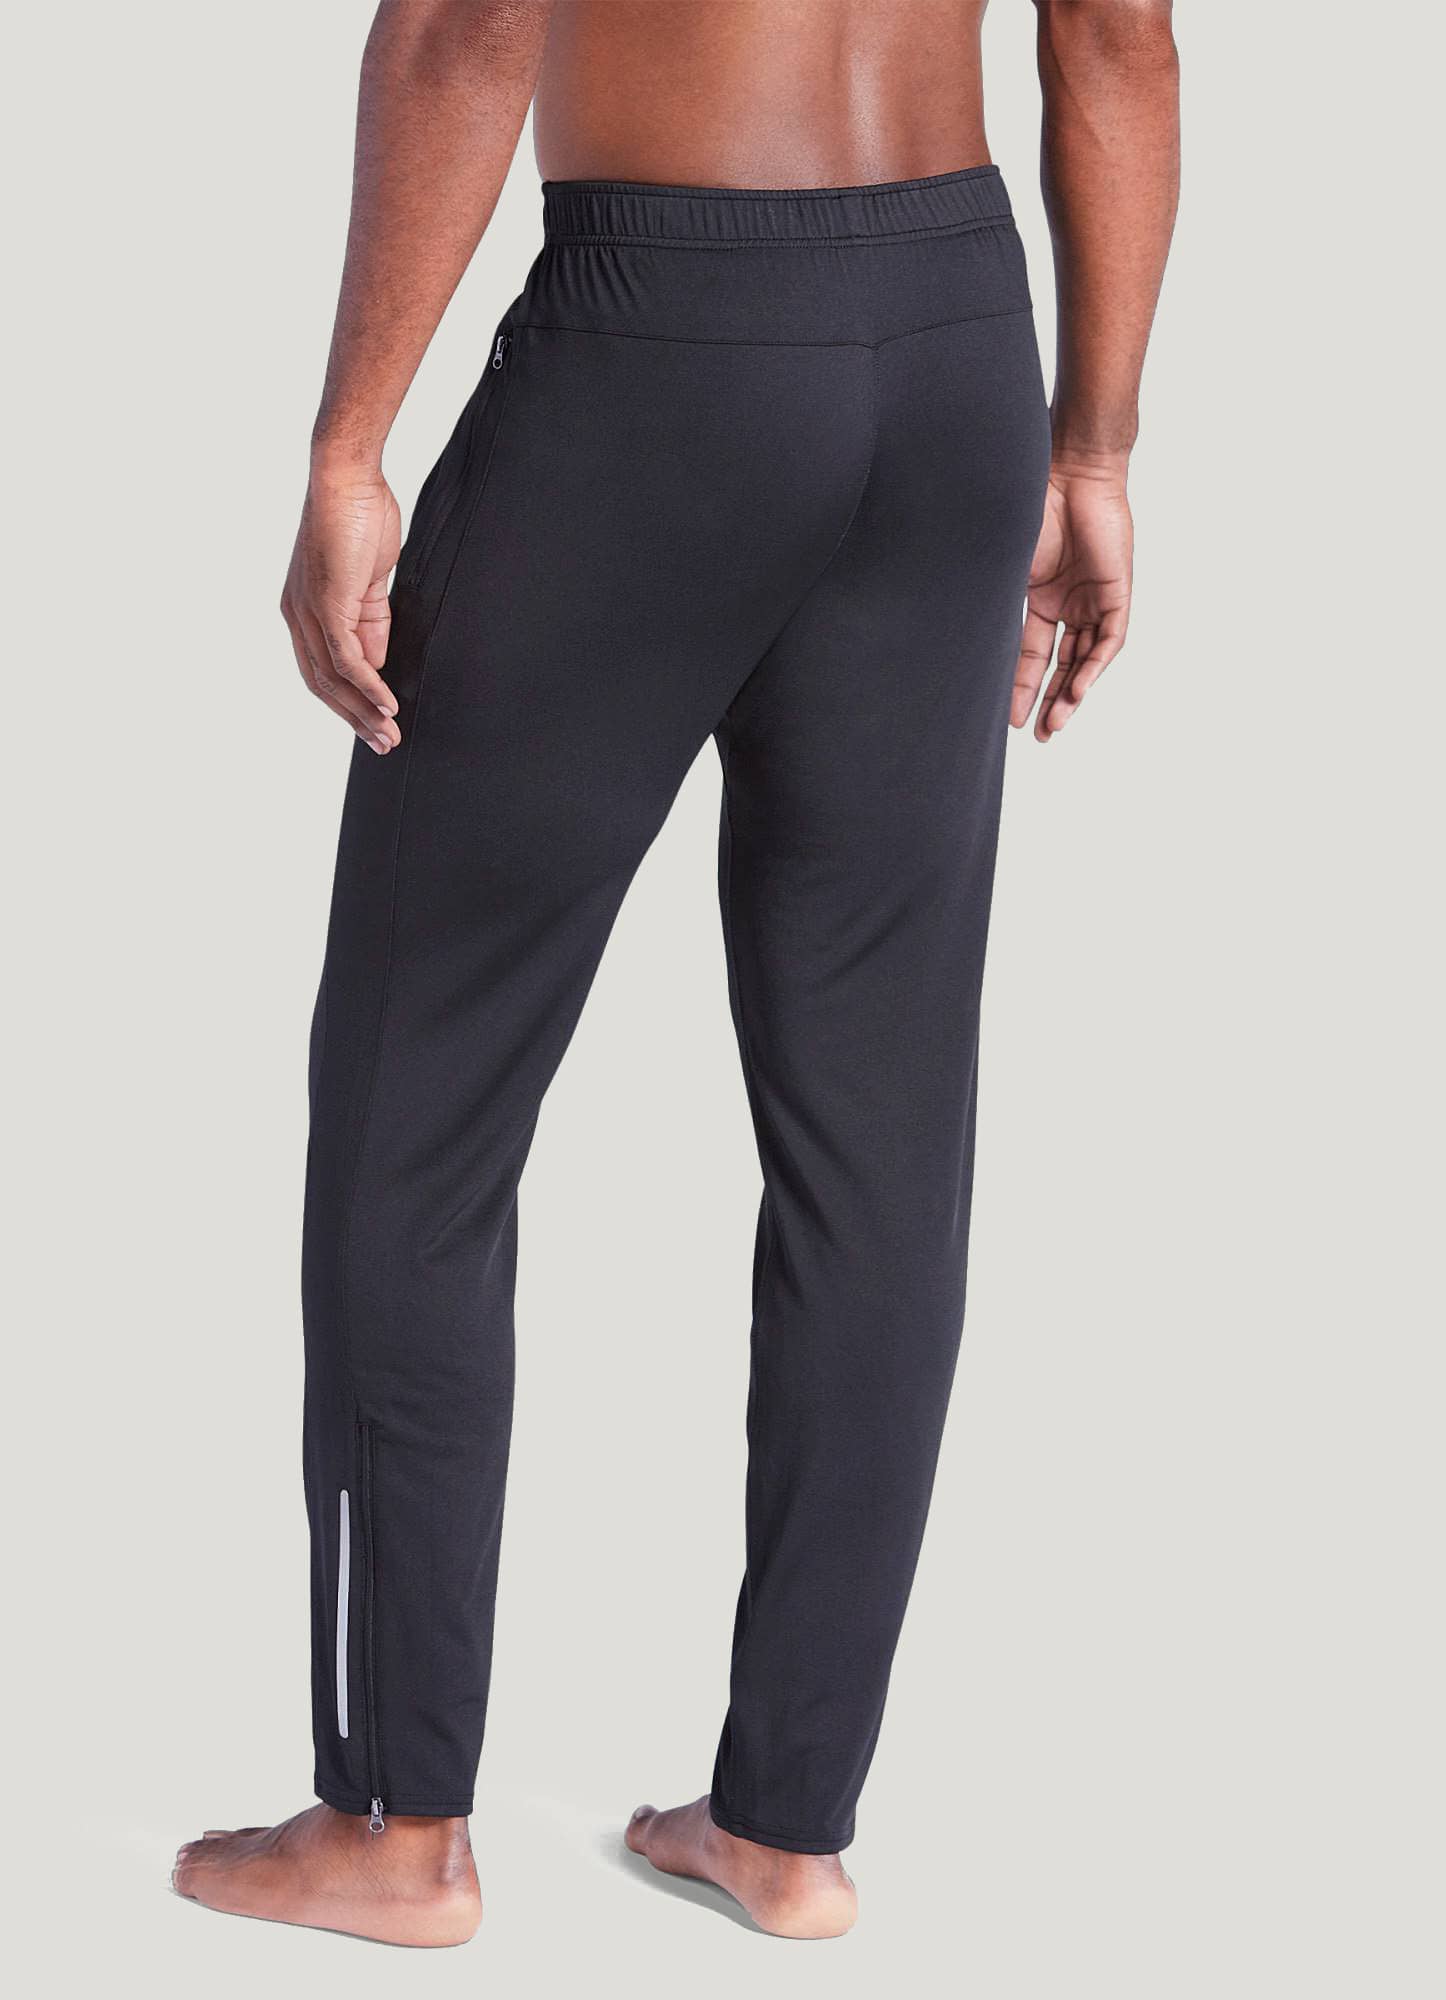 Jockey Mens Loop Terry Jogger Casual Pants, Light Grey Heather, Medium US  at Amazon Men's Clothing store